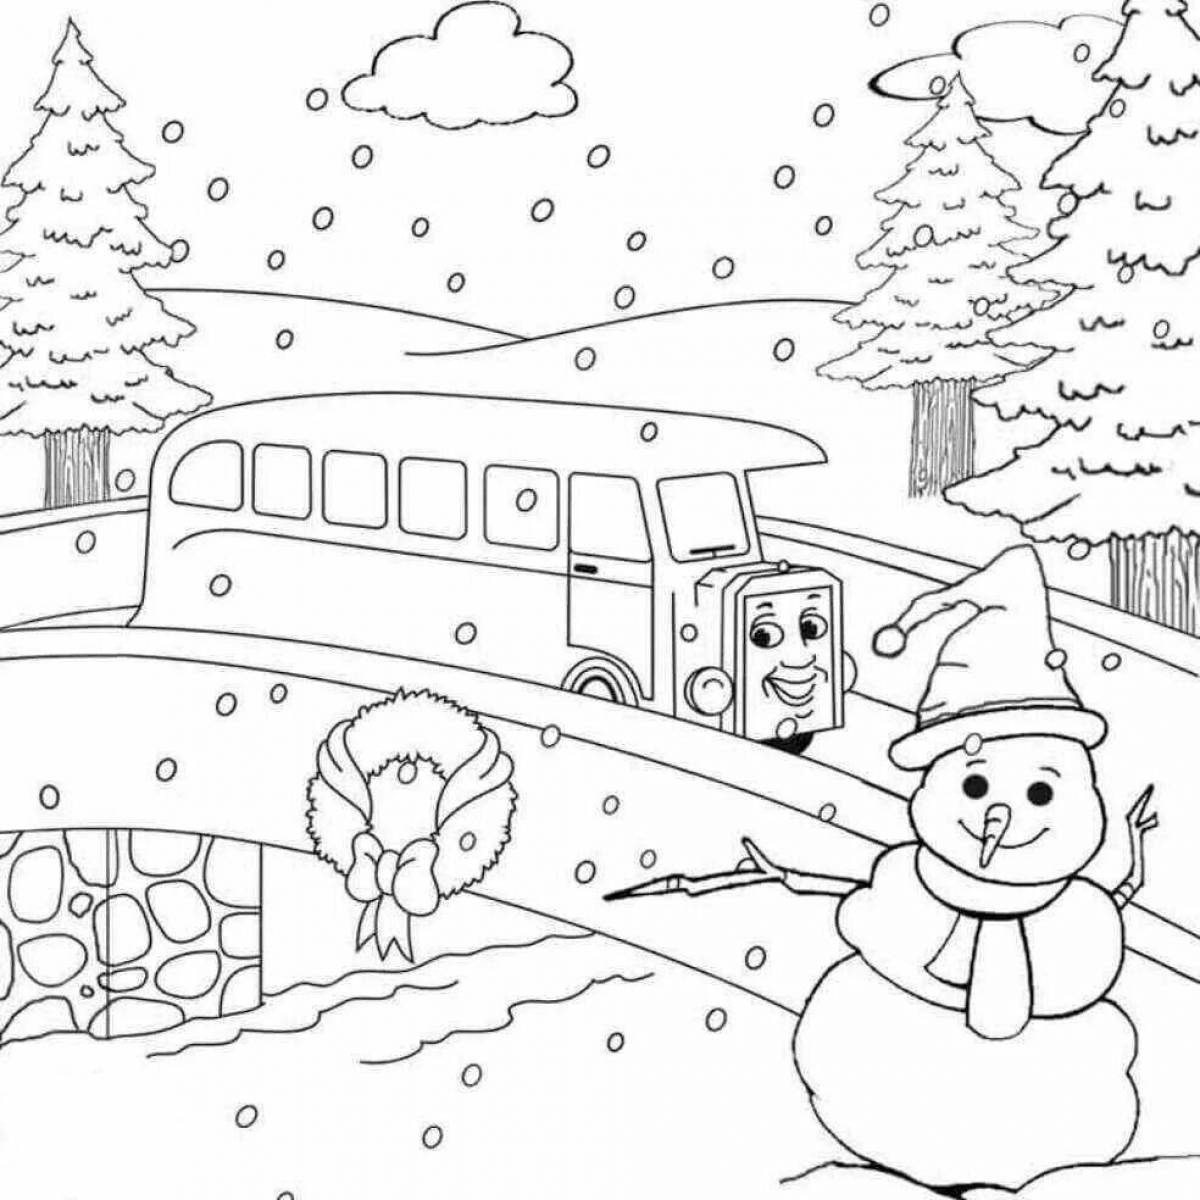 Snowflake coloring for schoolchildren